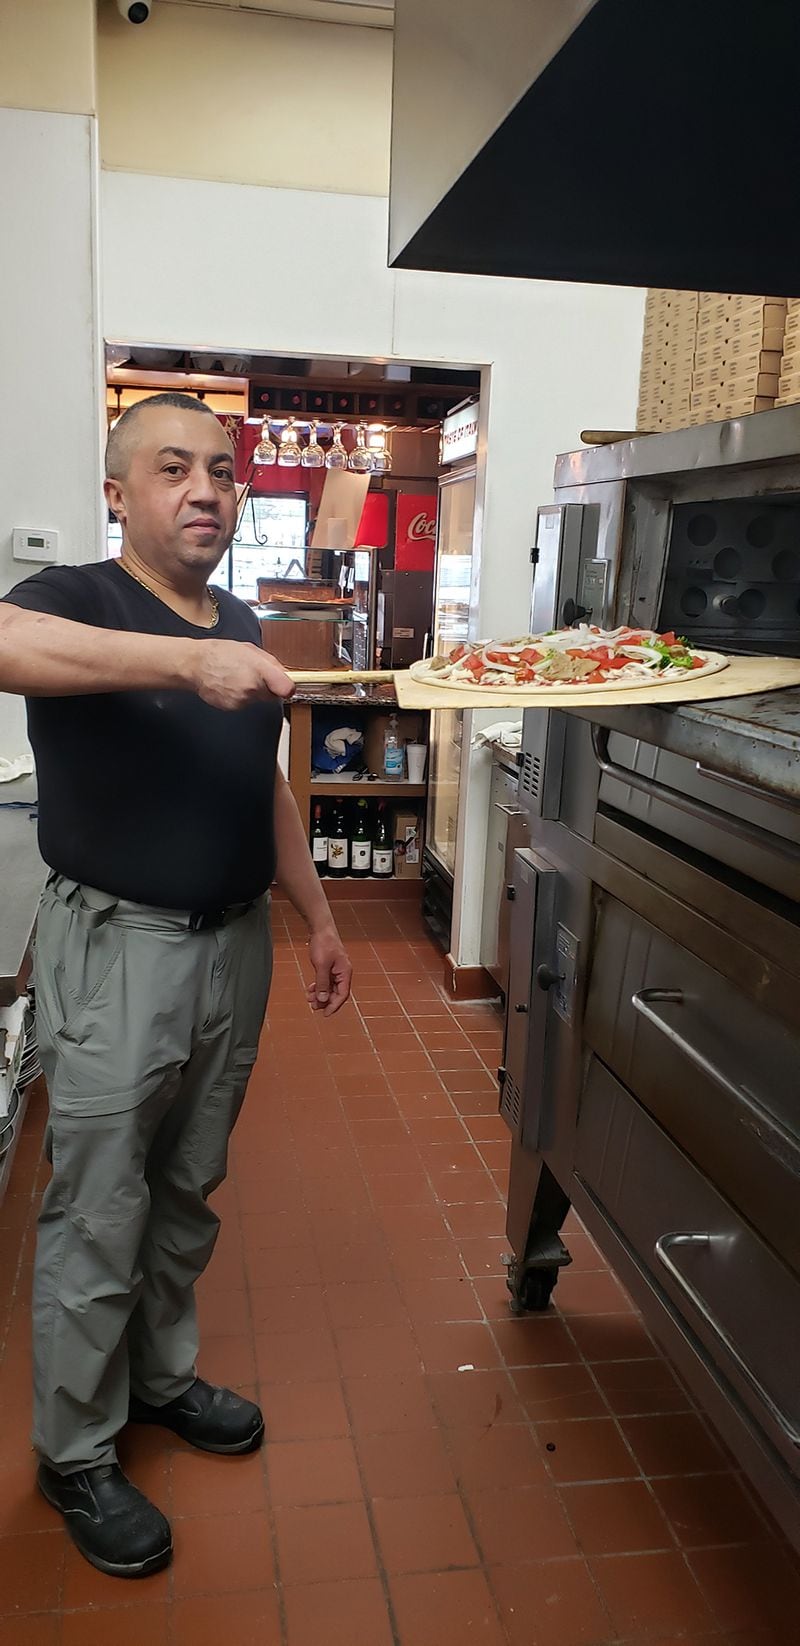 Naples native Biagio Schiano “Gino” Moriello shows off one of his New York-style pizzas at Taste of Italy. Courtesy of Biagio Schiano Moriello